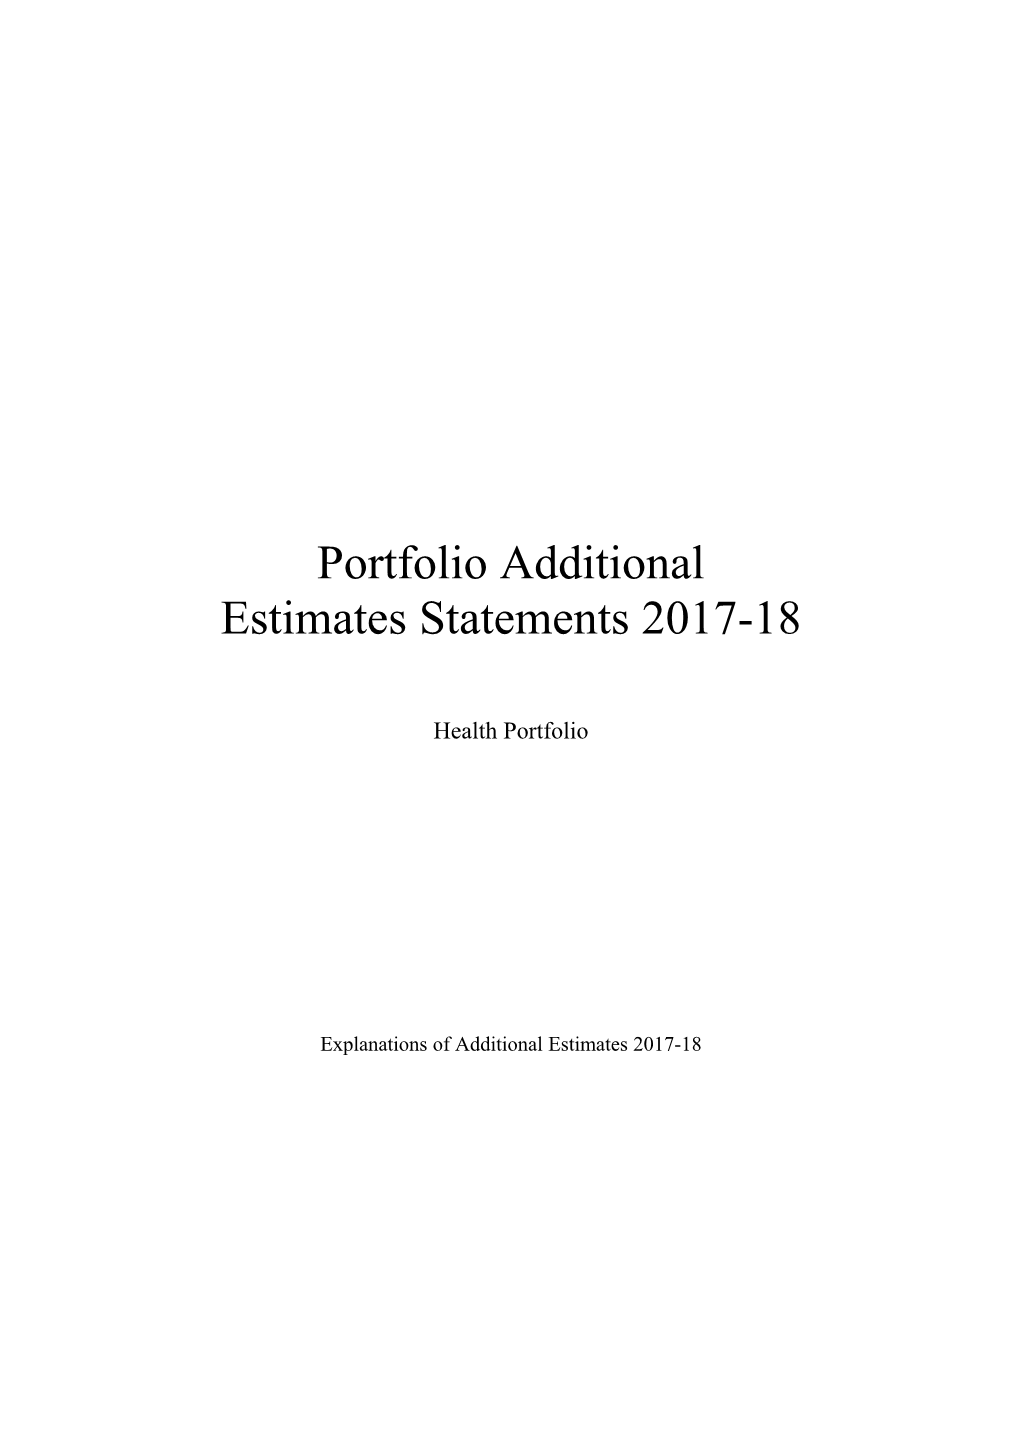 Portfolioadditional Estimatesstatements 2017-18